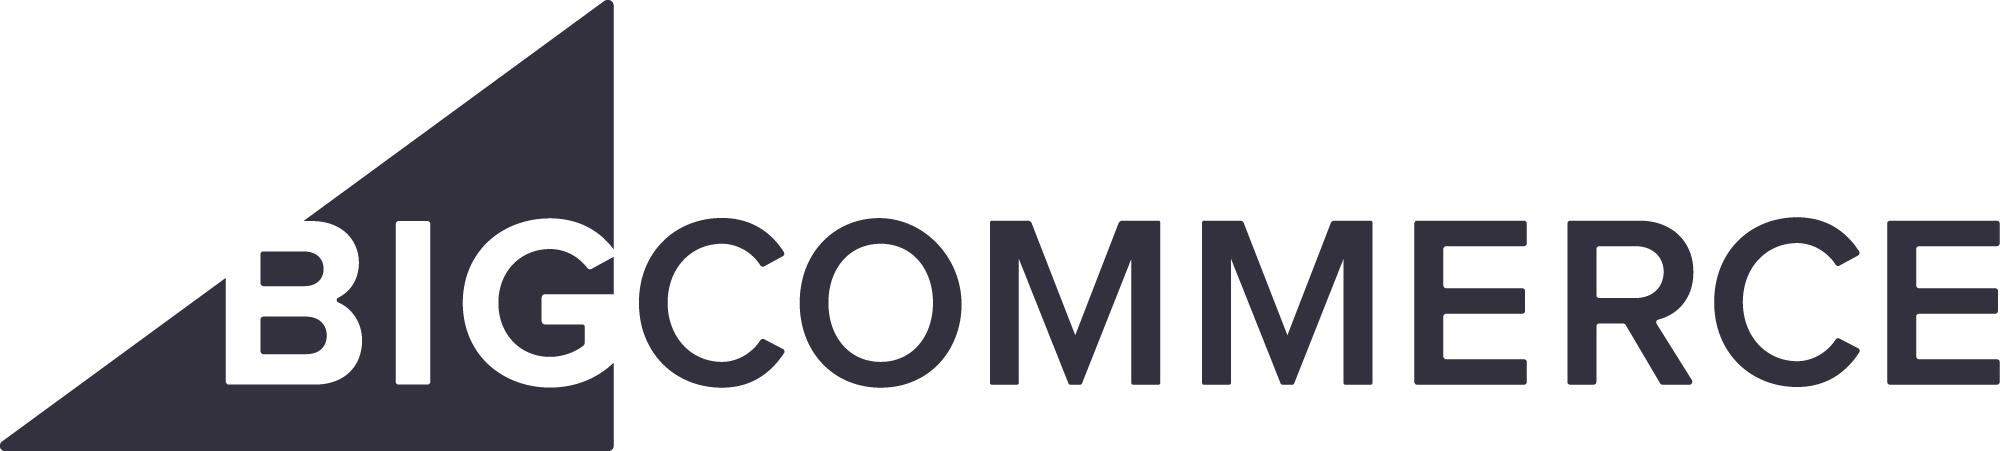 BigCommerce-logo-dark.png